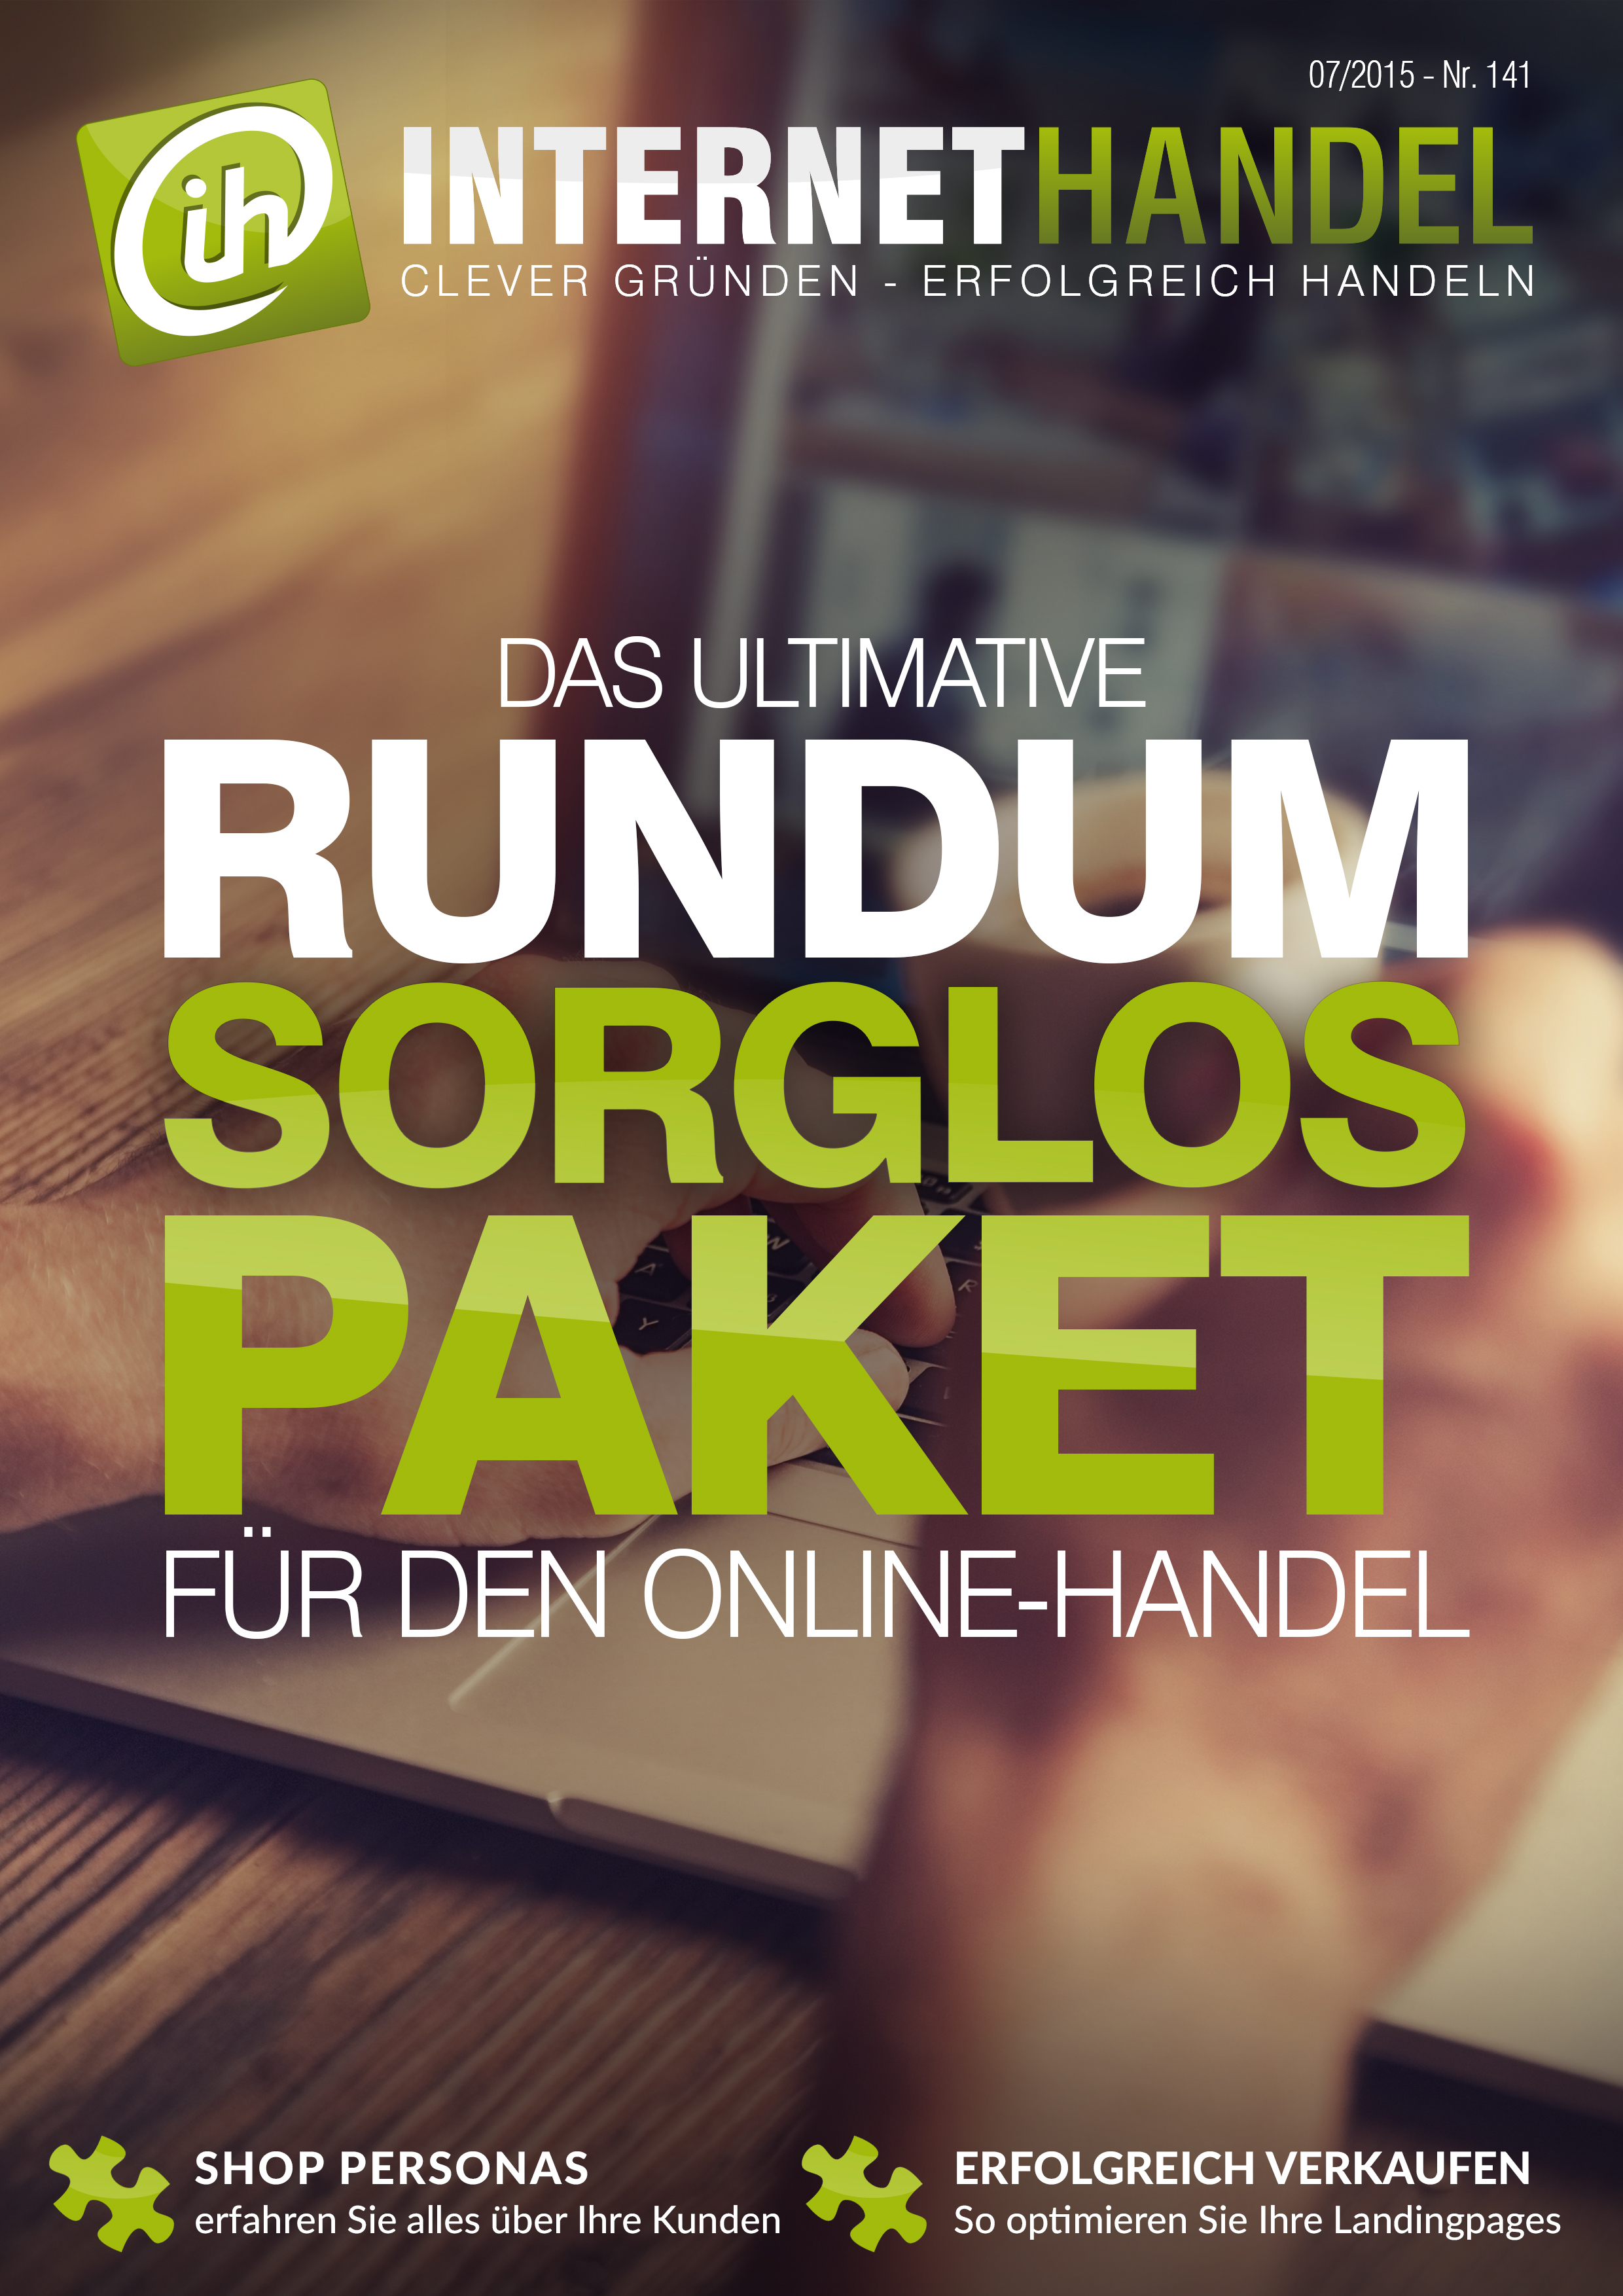 Titelbild-Internethandel-de-Nr-141-07-2015-Das-ultimative-Rundum-Sorglos-Paket-fuer-den-Online-Handel